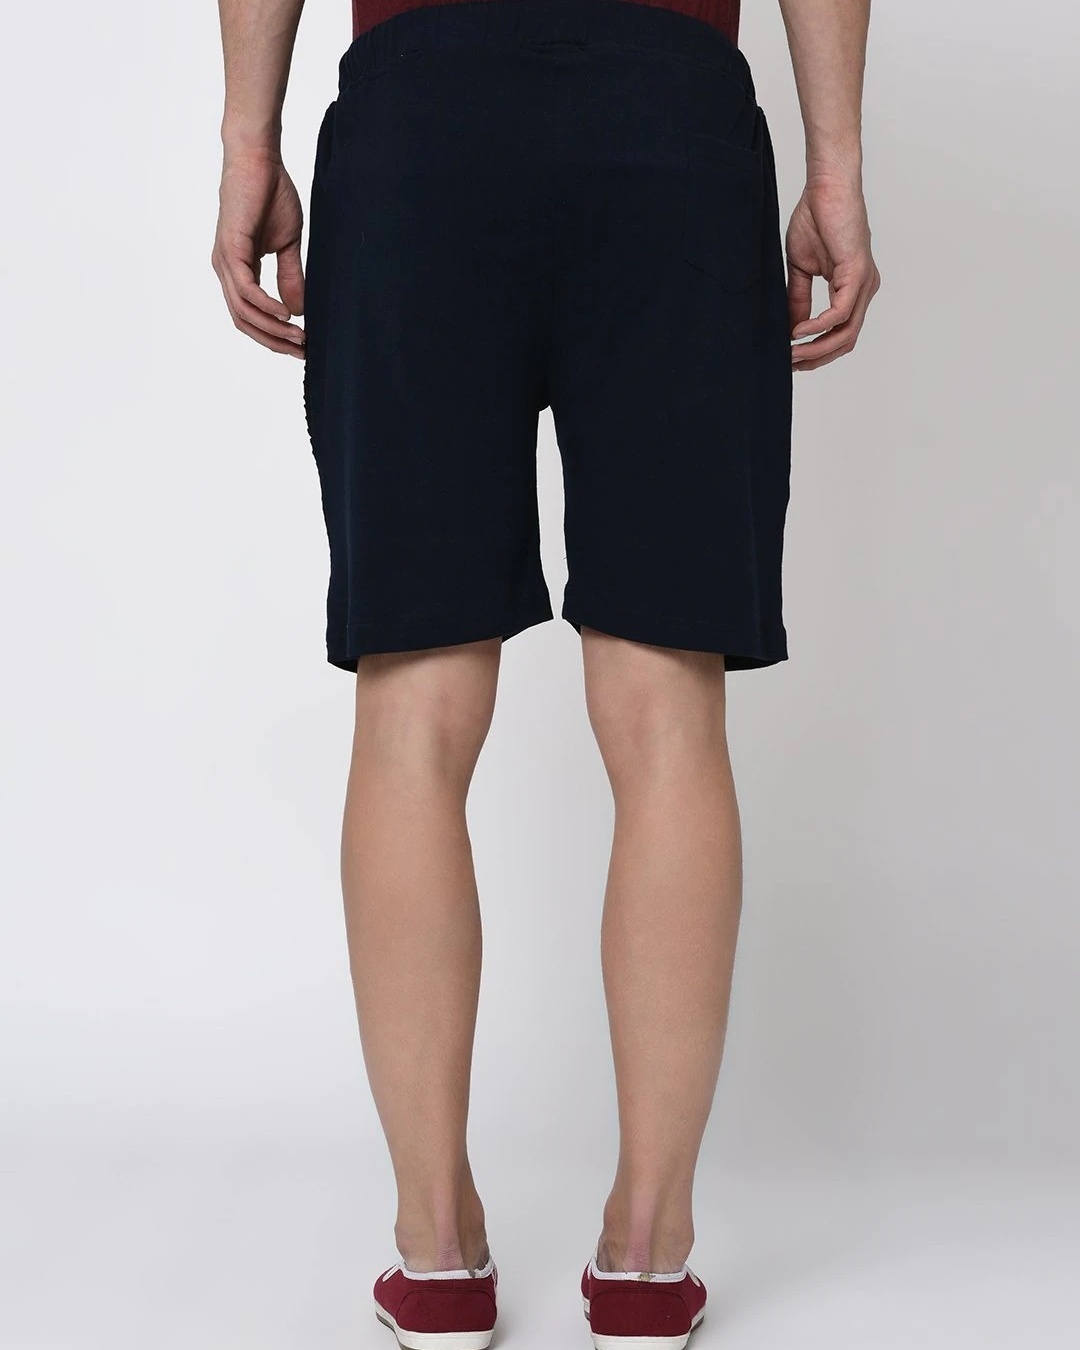 Shop Men's Blue & Black Color Block Shorts-Design